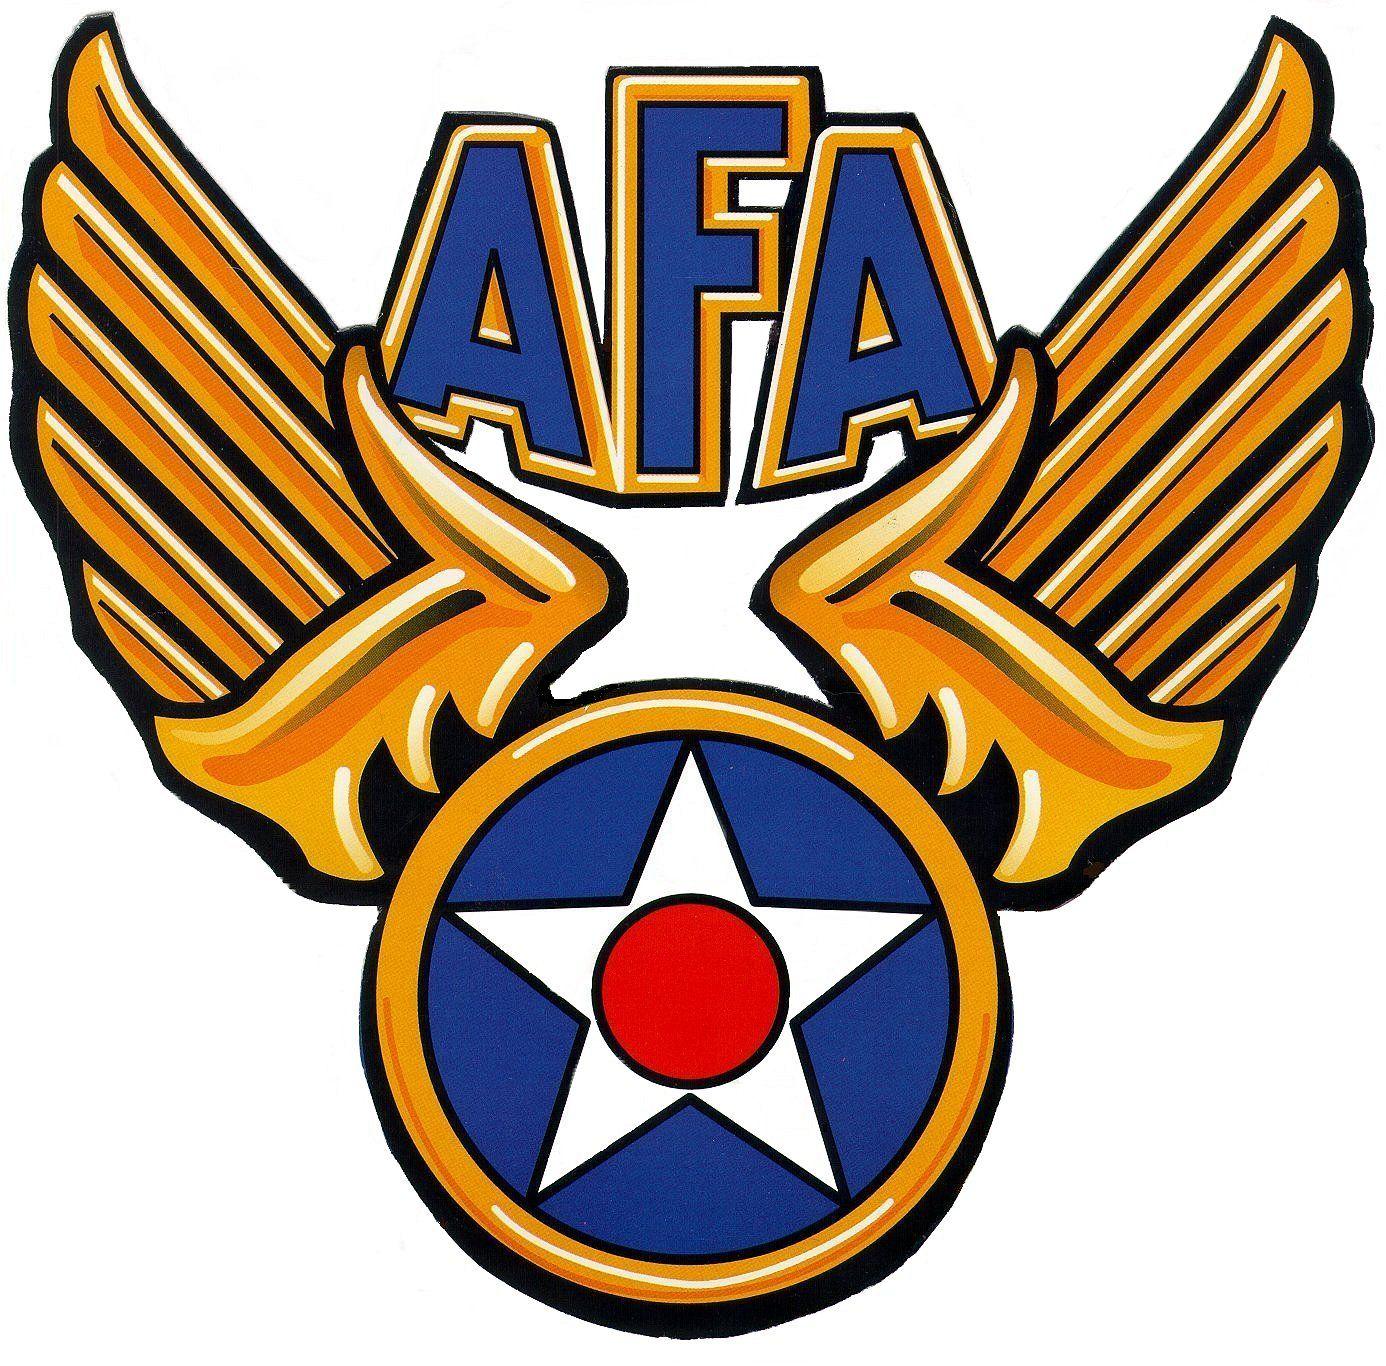 AFA Logo - Afa Logos